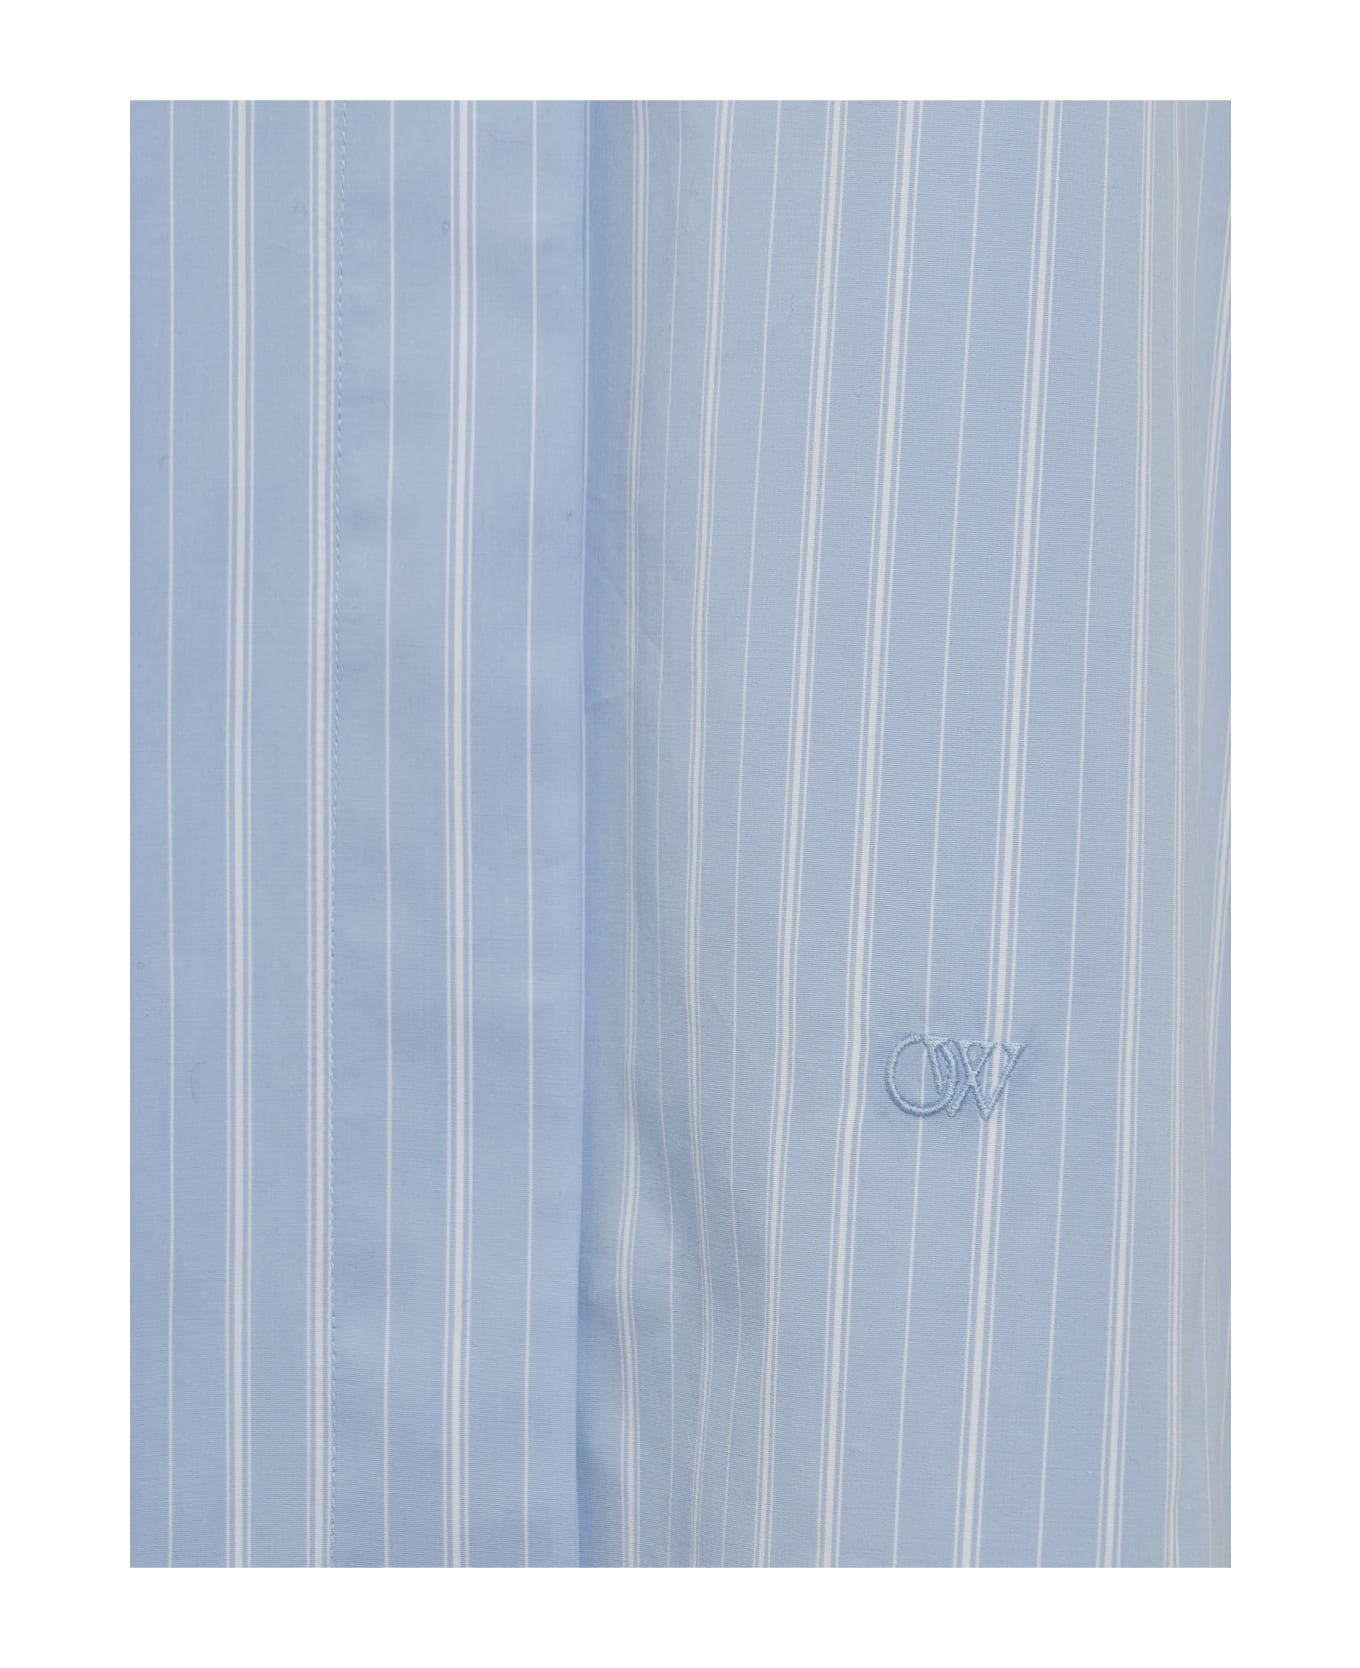 Off-White Embroidered Poplin Shirt Dress - LIGHT BLUE